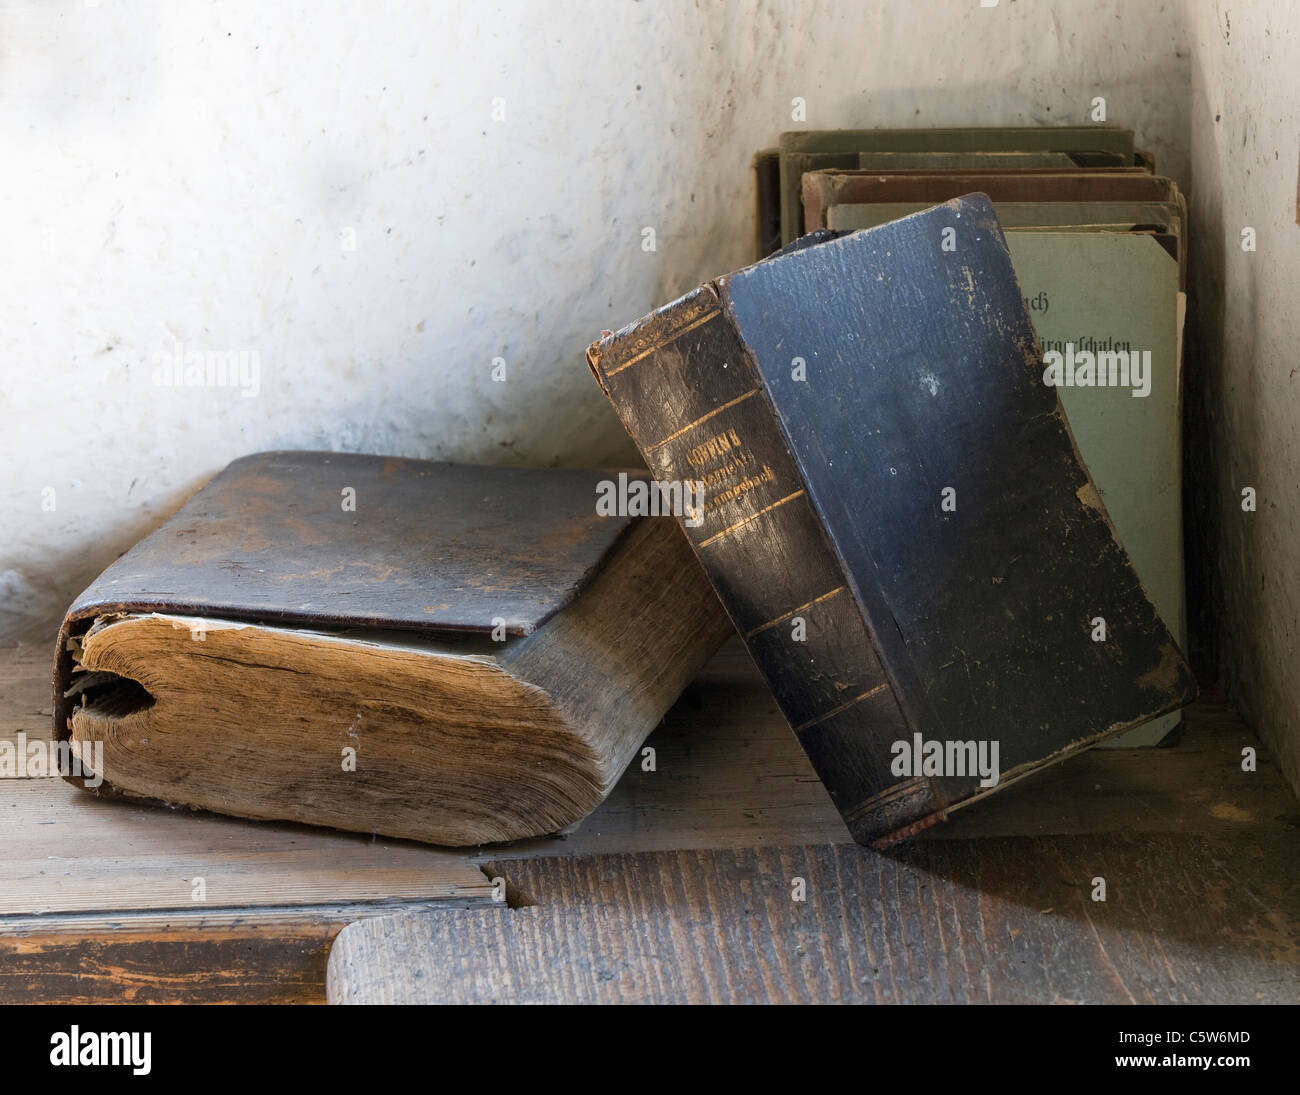 Austria, Mondsee (city), Old books at farmhouse Stock Photo